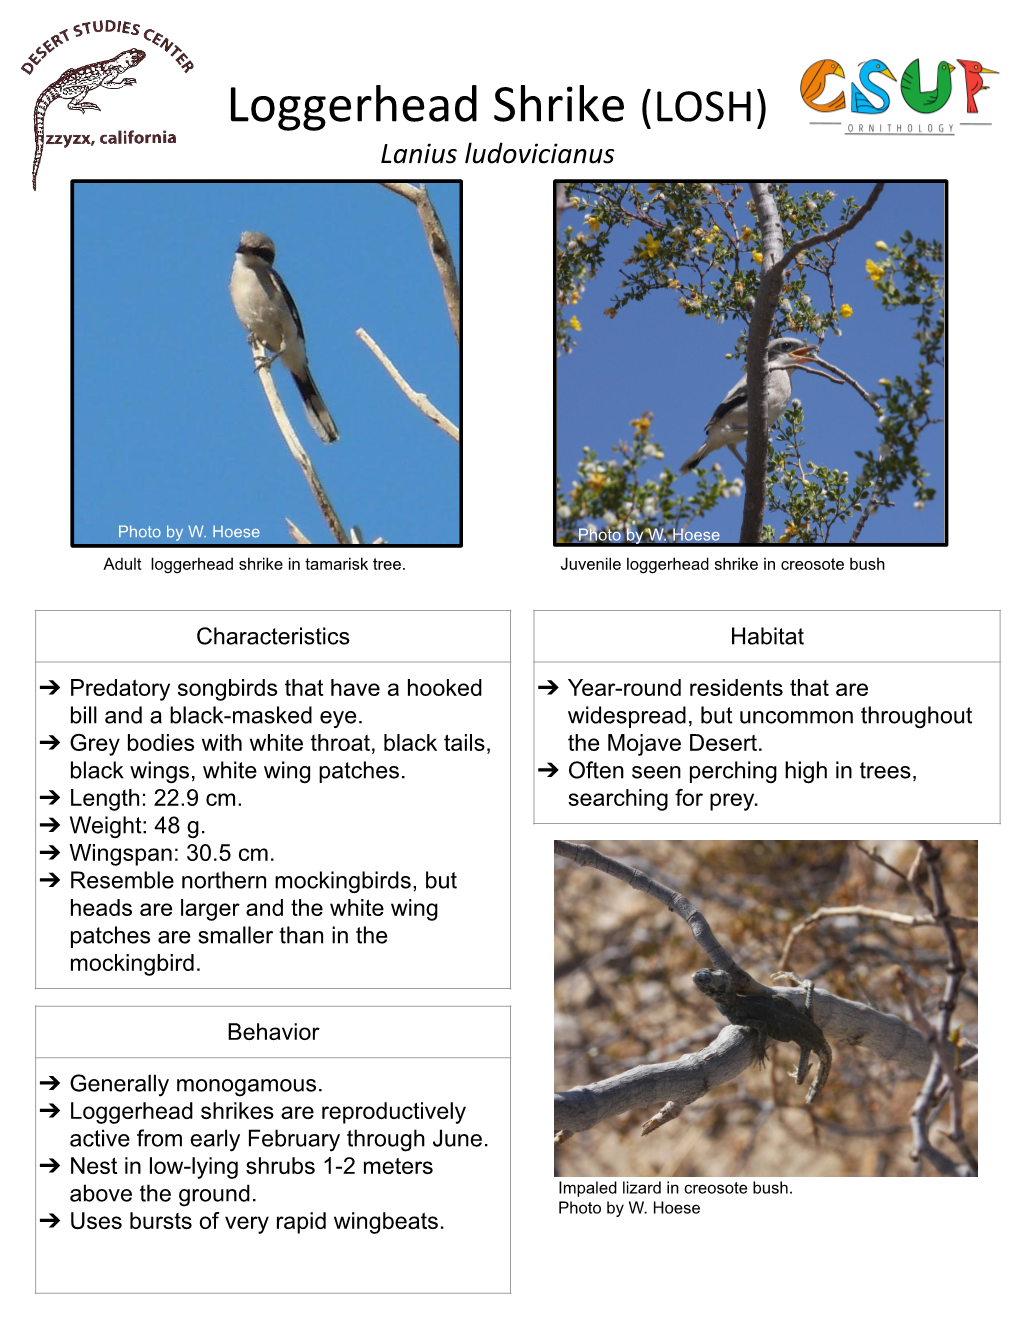 Loggerhead Shrike in Tamarisk Tree